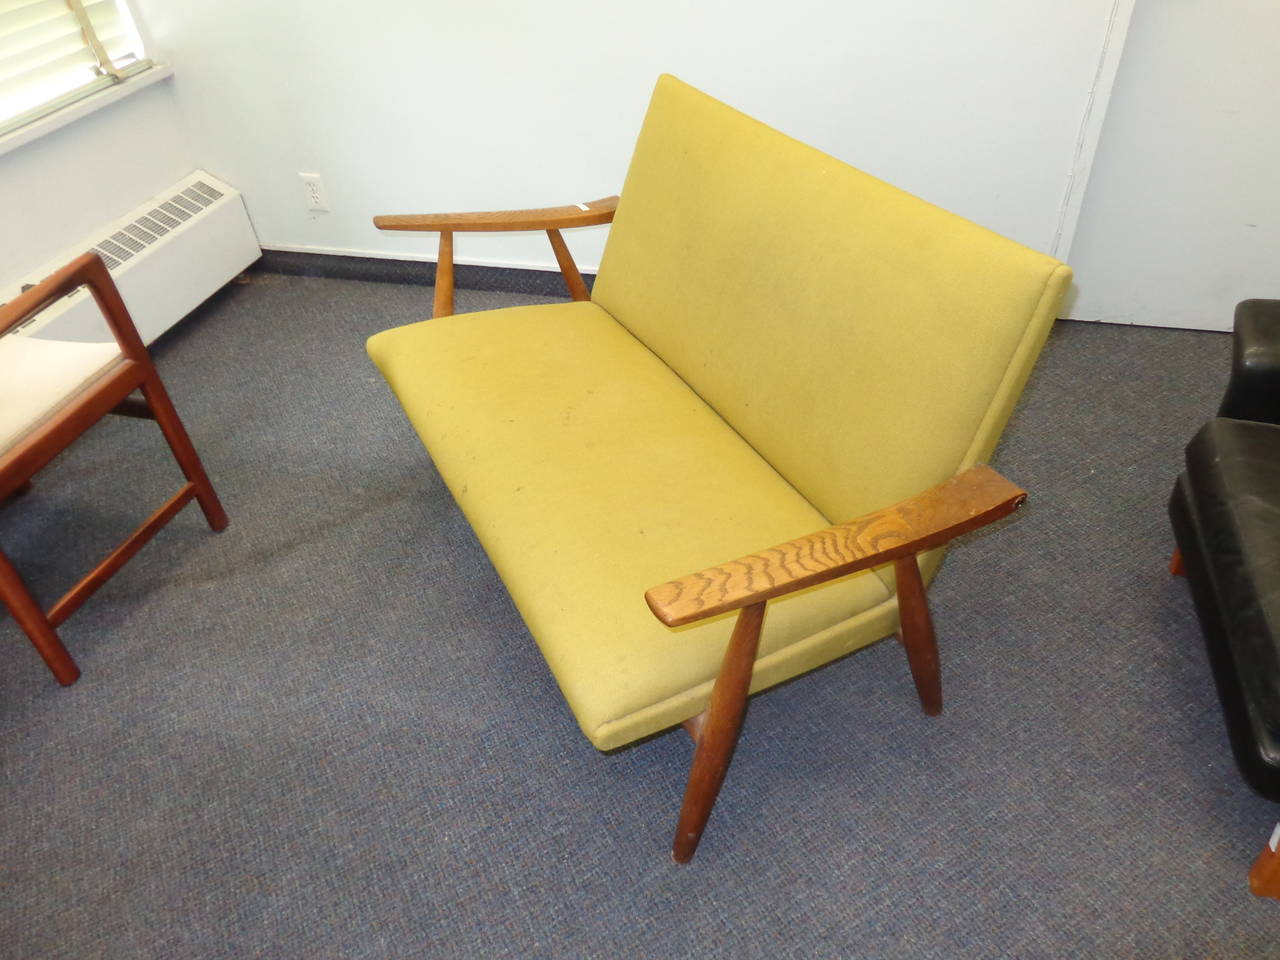 Hans Wegner two-seat sofa, oak frame, moulded armrests with brass details. Original woolen fabric upholstery. Produced by GETAMA, model GE-260/2.